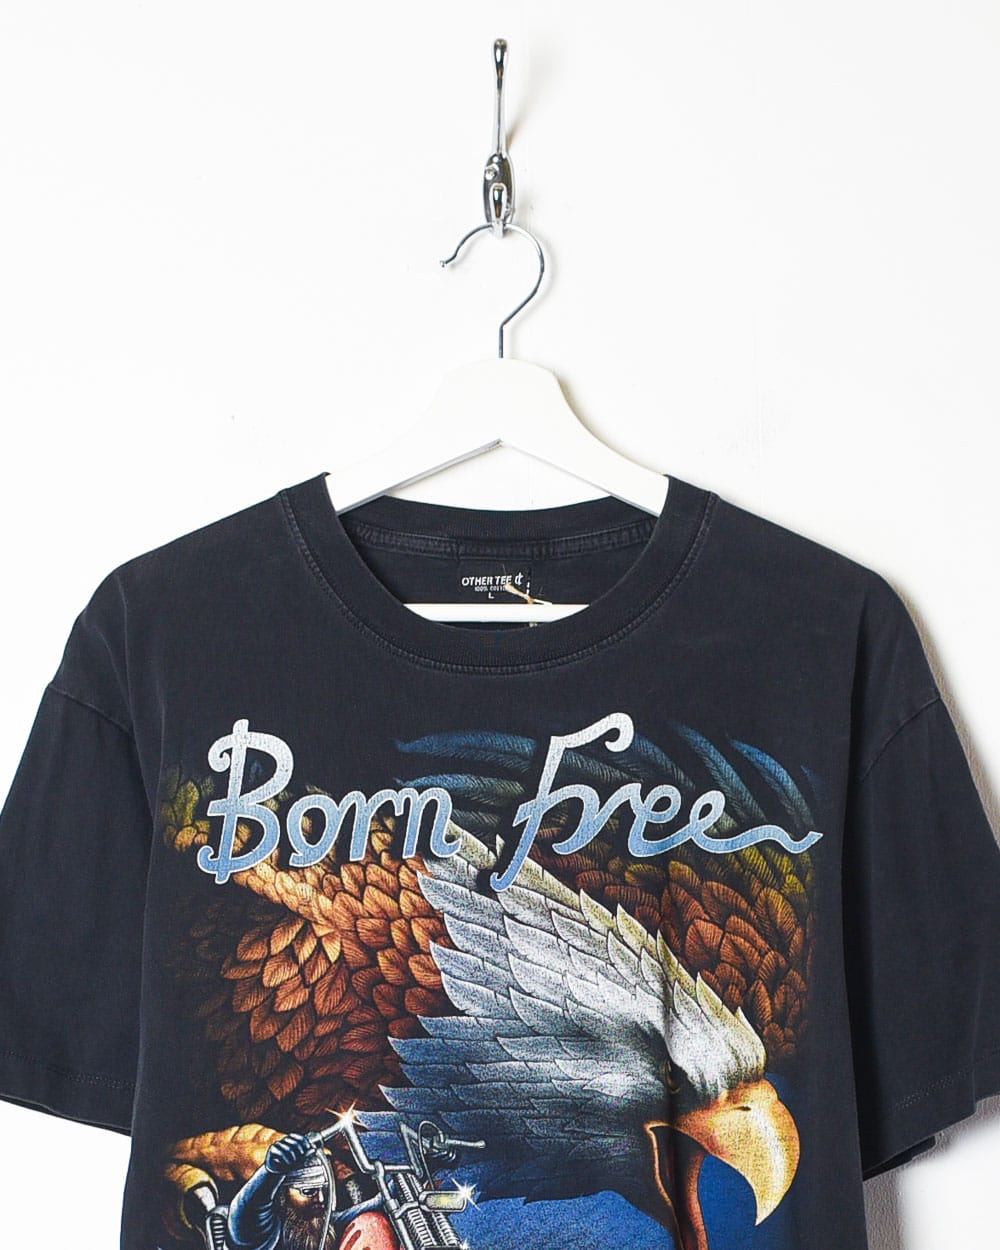 Black Born Free Eagle Motorcycle Graphic T-Shirt - Medium